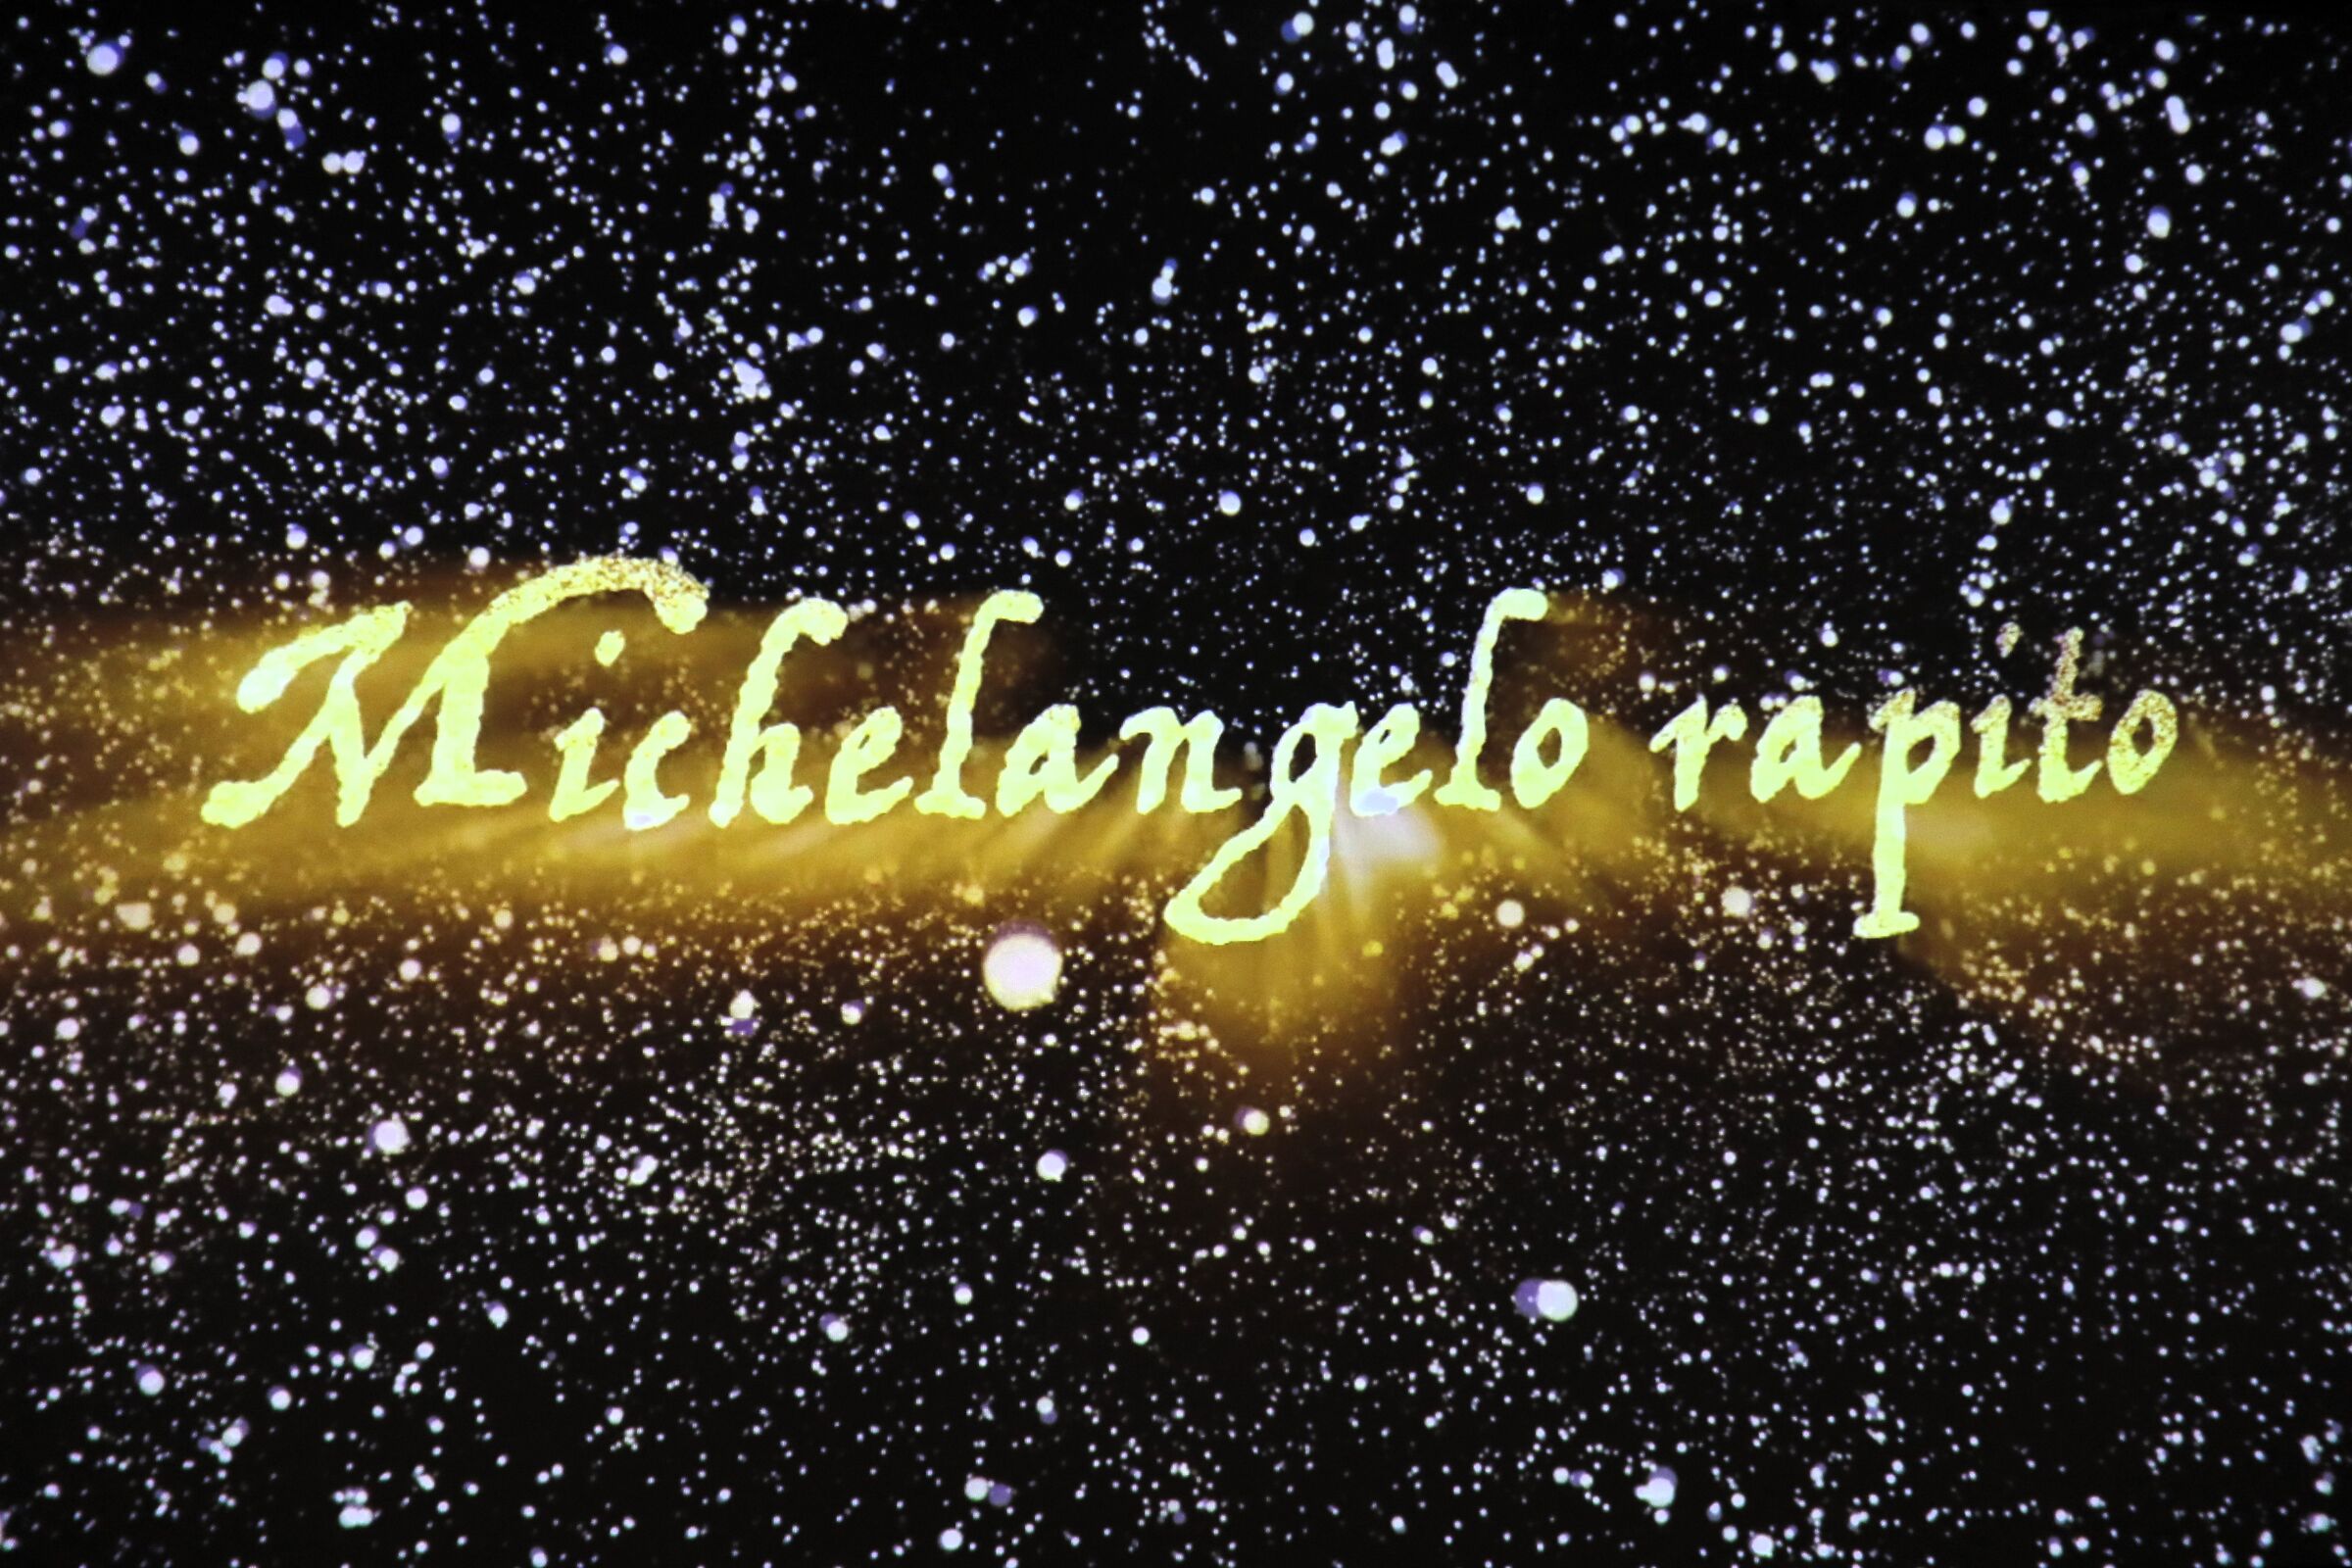 " Michelangelo rapito "...